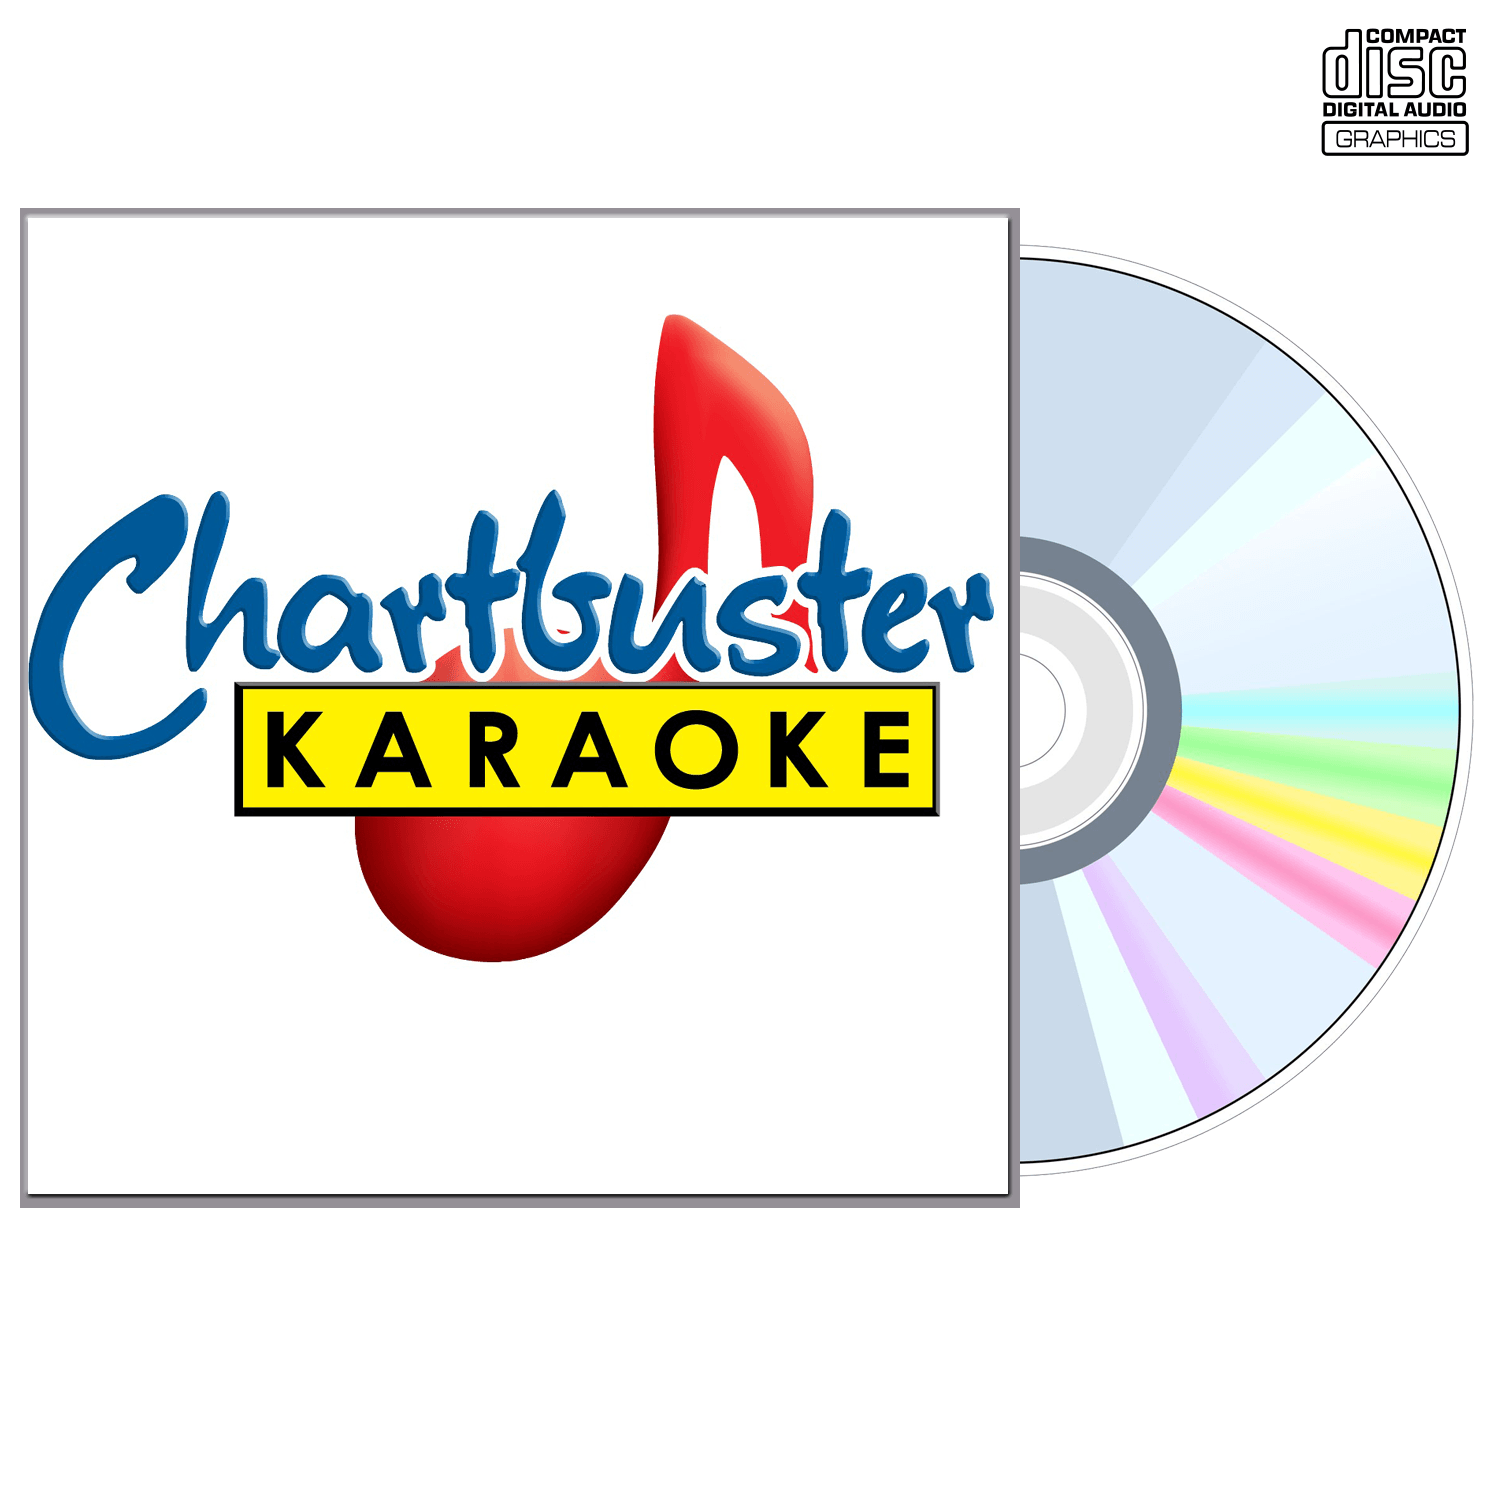 Ultimate Rock N Roll Vol 1 - CD+G - Chartbuster Karaoke - Karaoke Home Entertainment